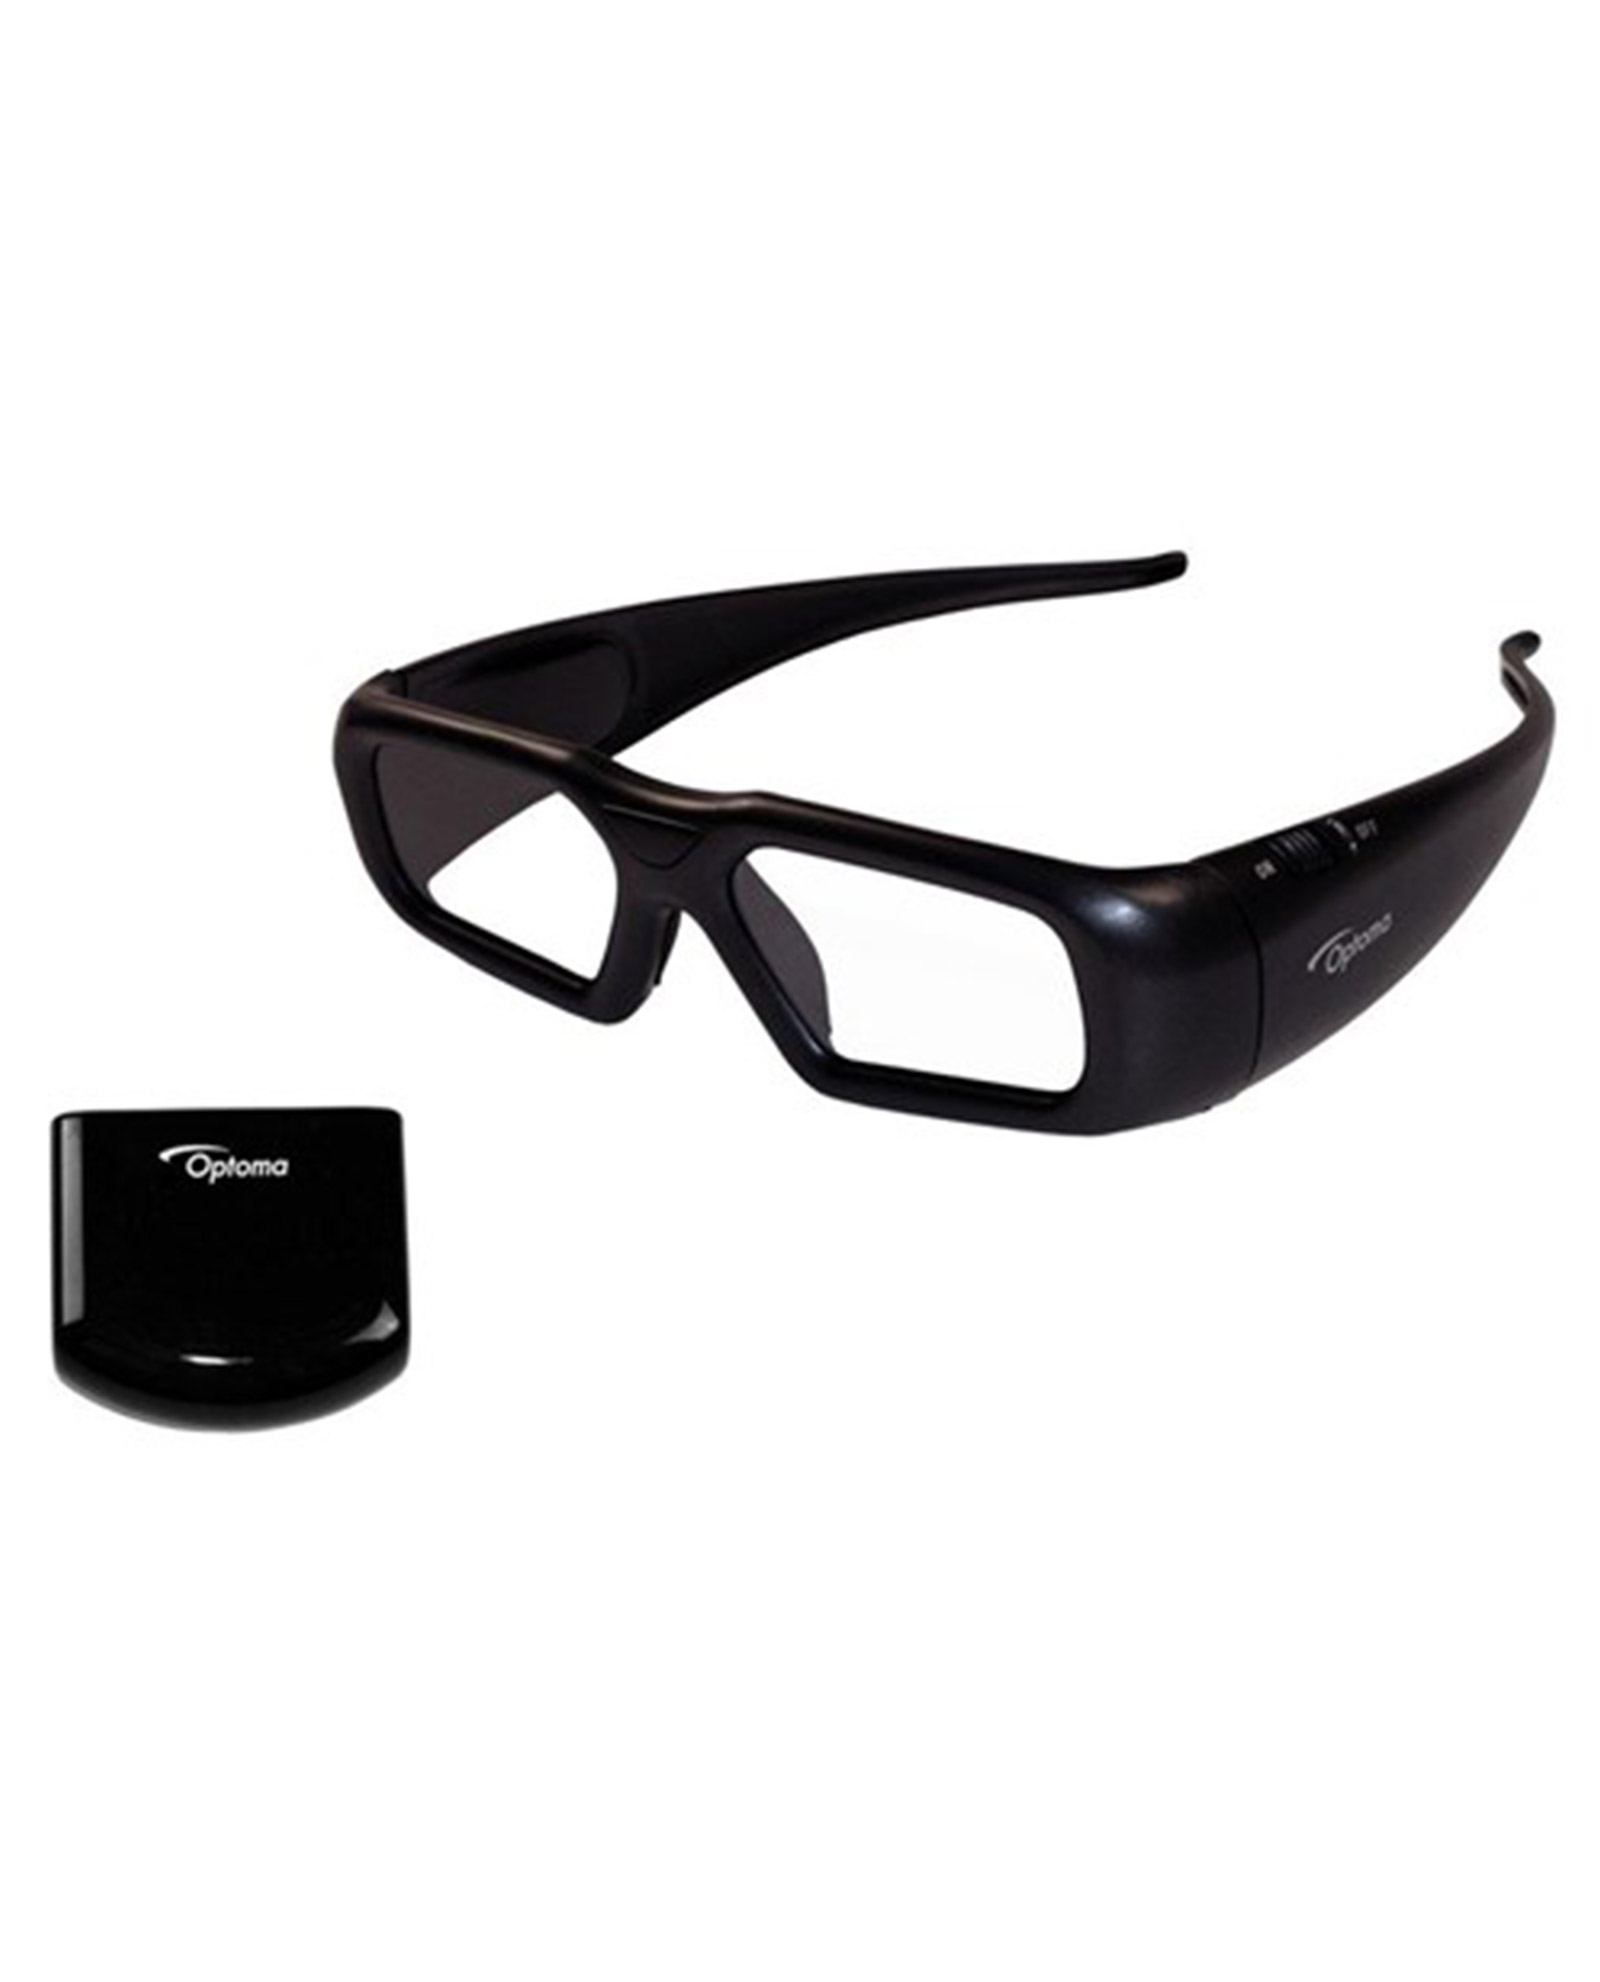 Optoma Zf2300 Emitter Glasses